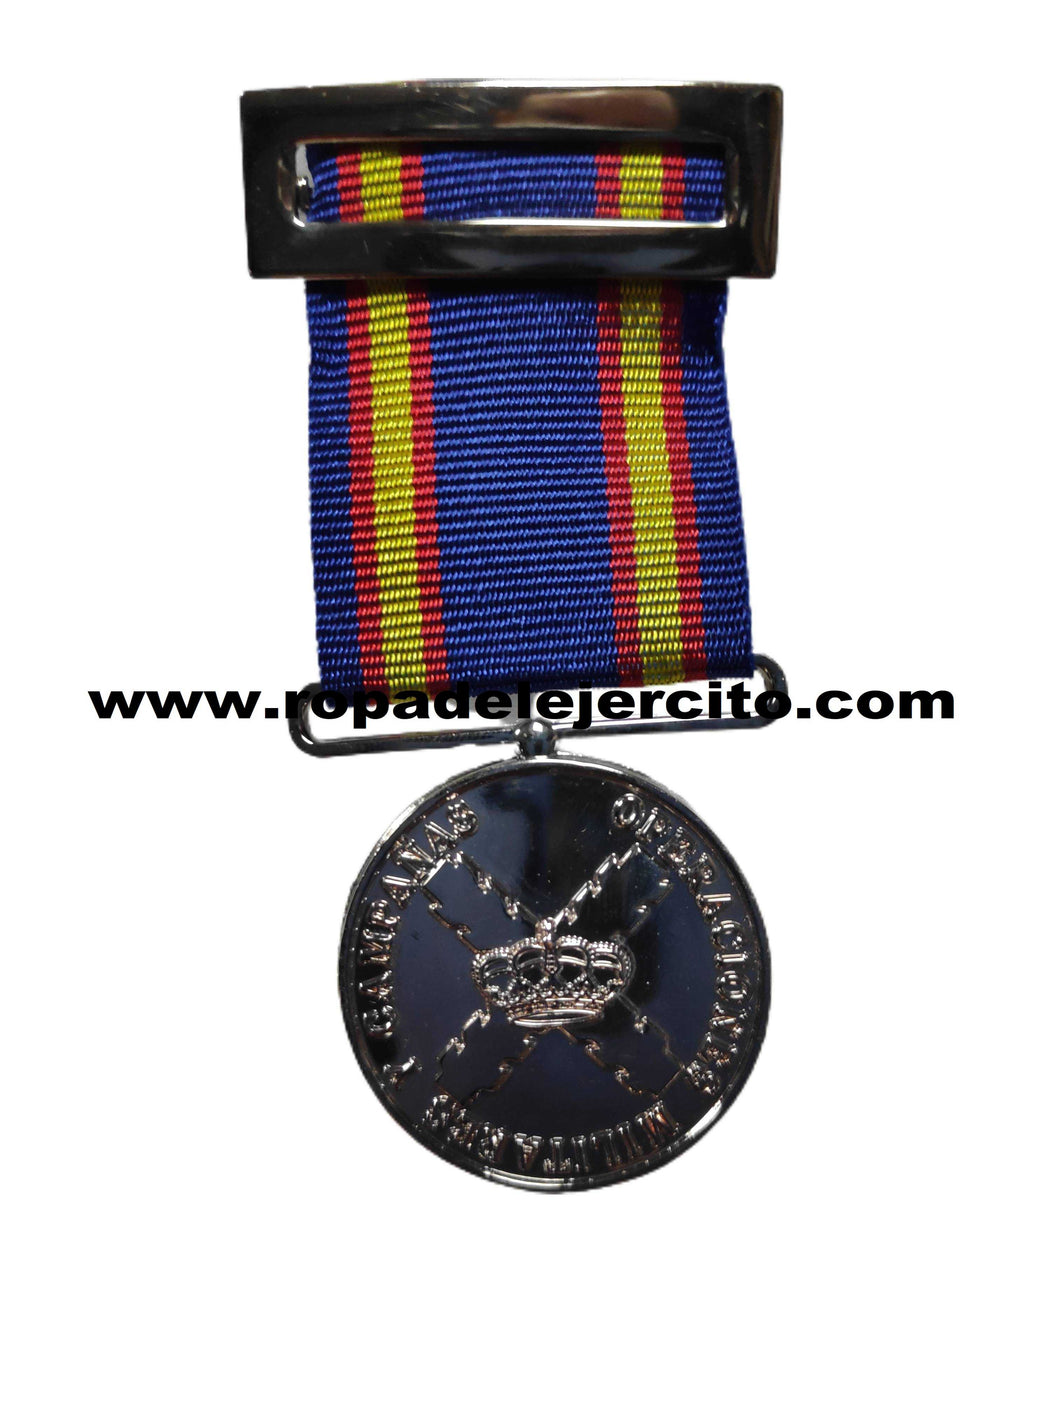 Medalla campaña militar